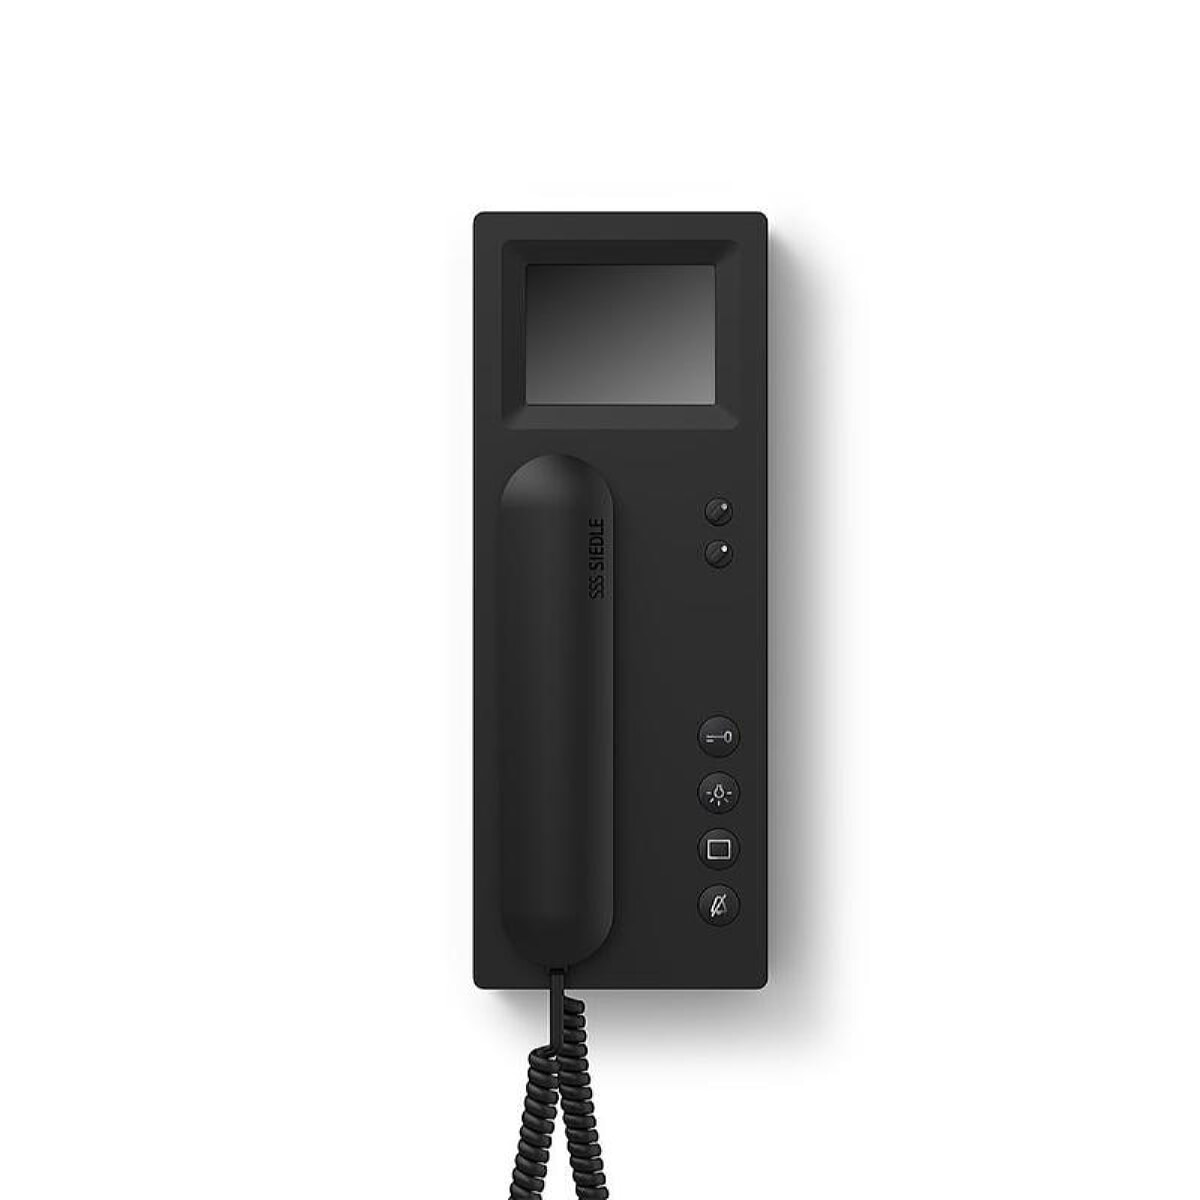 Siedle Haustelefon BTSV 850-03 S schwarz mit Farbmonitor